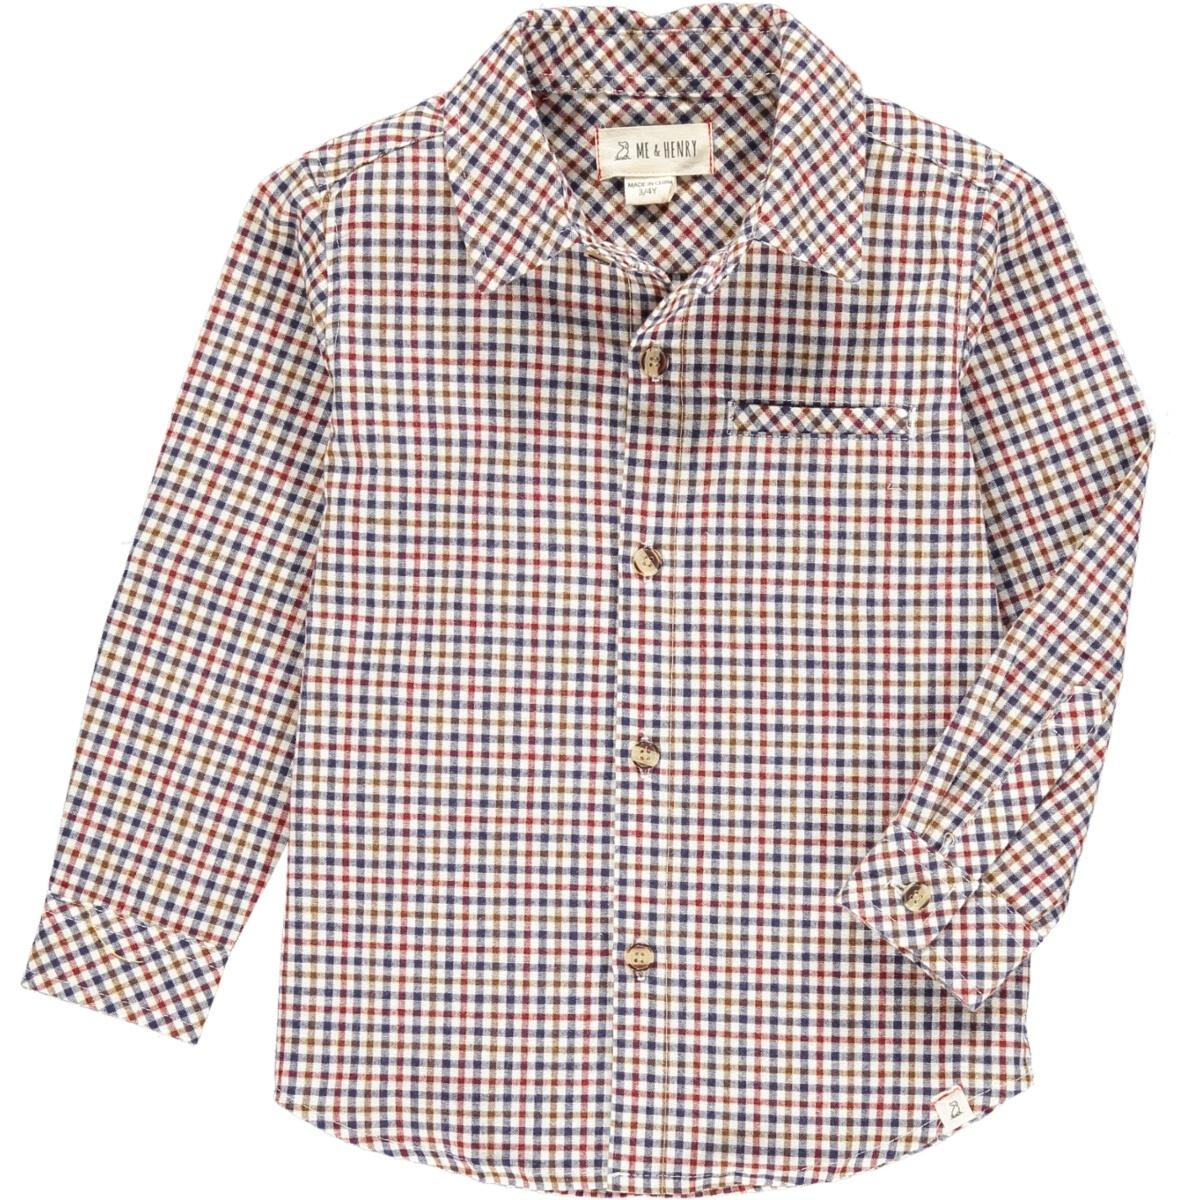 atwood navy/cream/wine plaid woven shirt